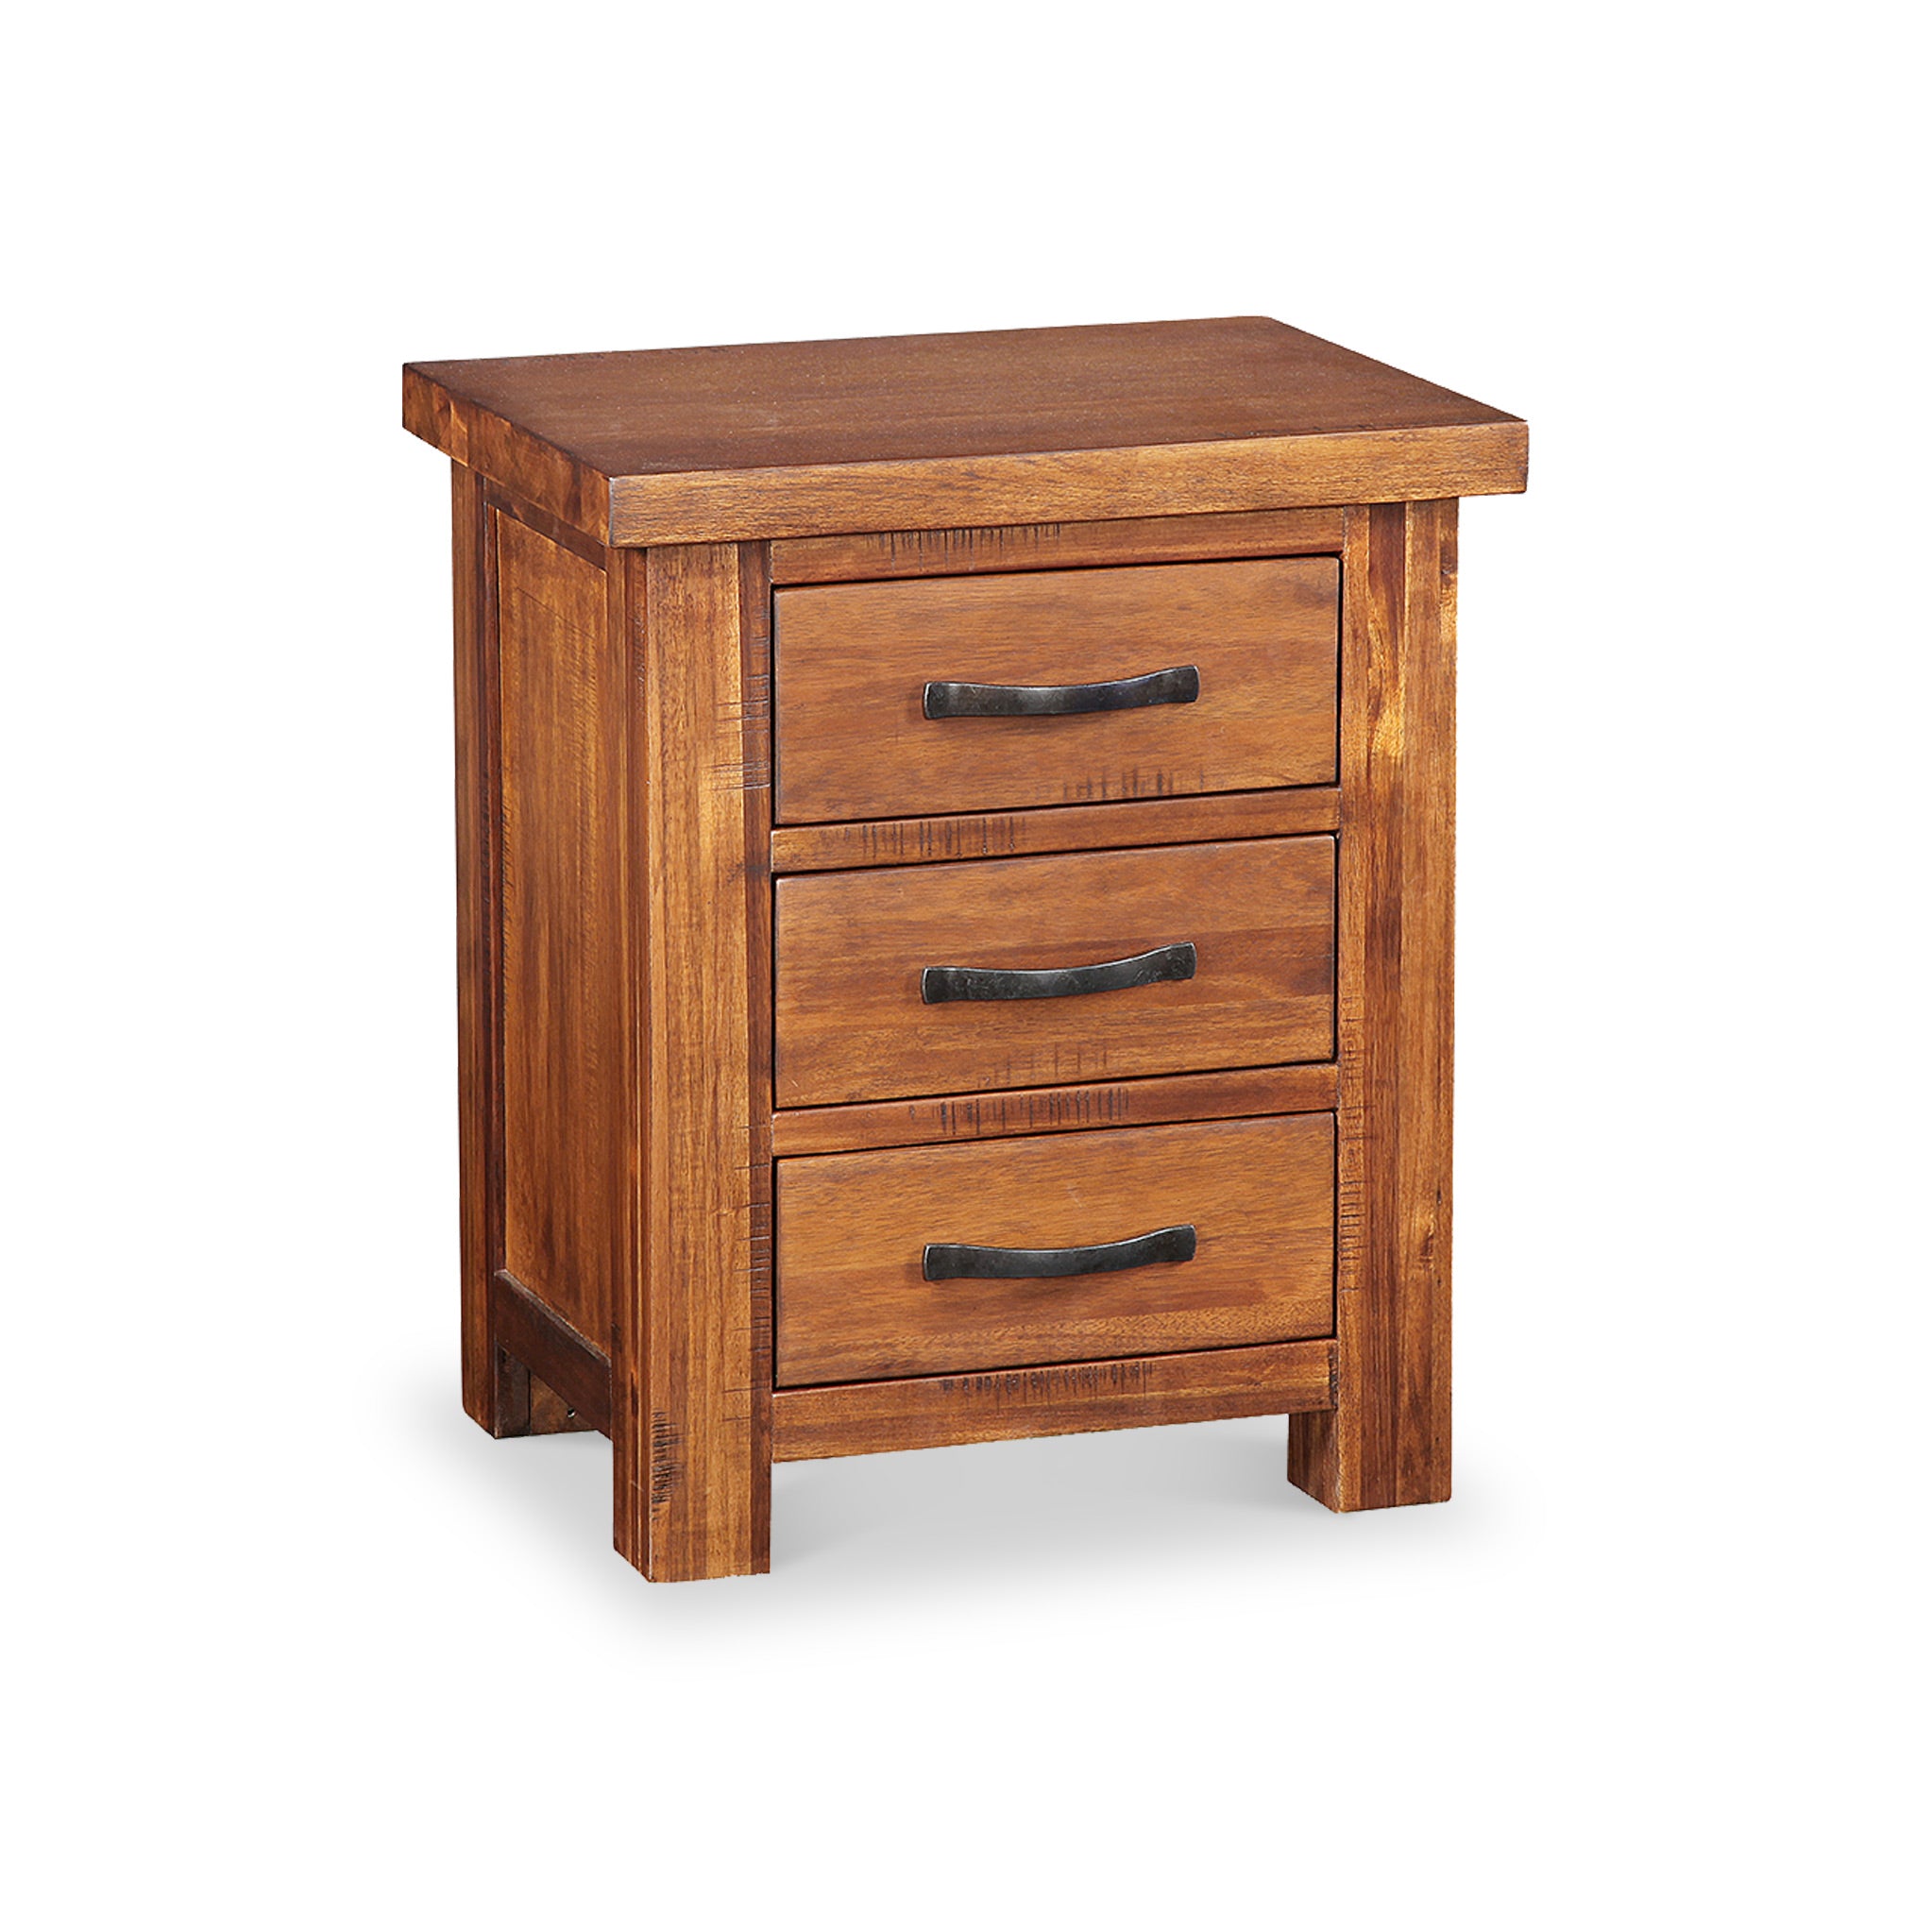 Ladock Acacia Bedside Table 3 Drawer Cabinet For Bedroom Roseland